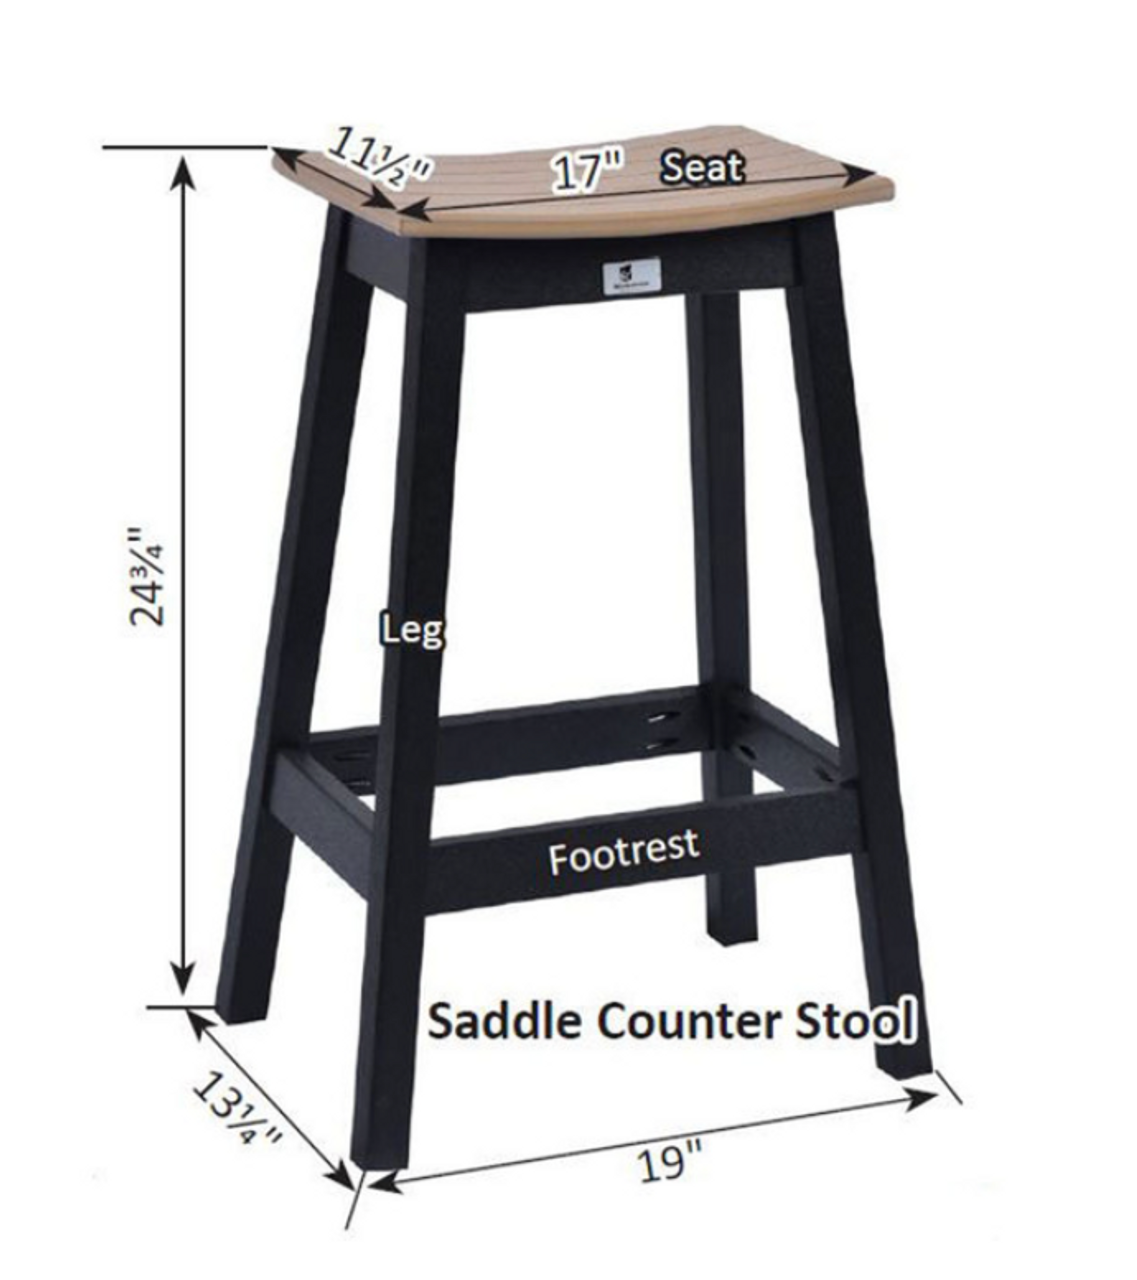 Saddle Stool dimensions